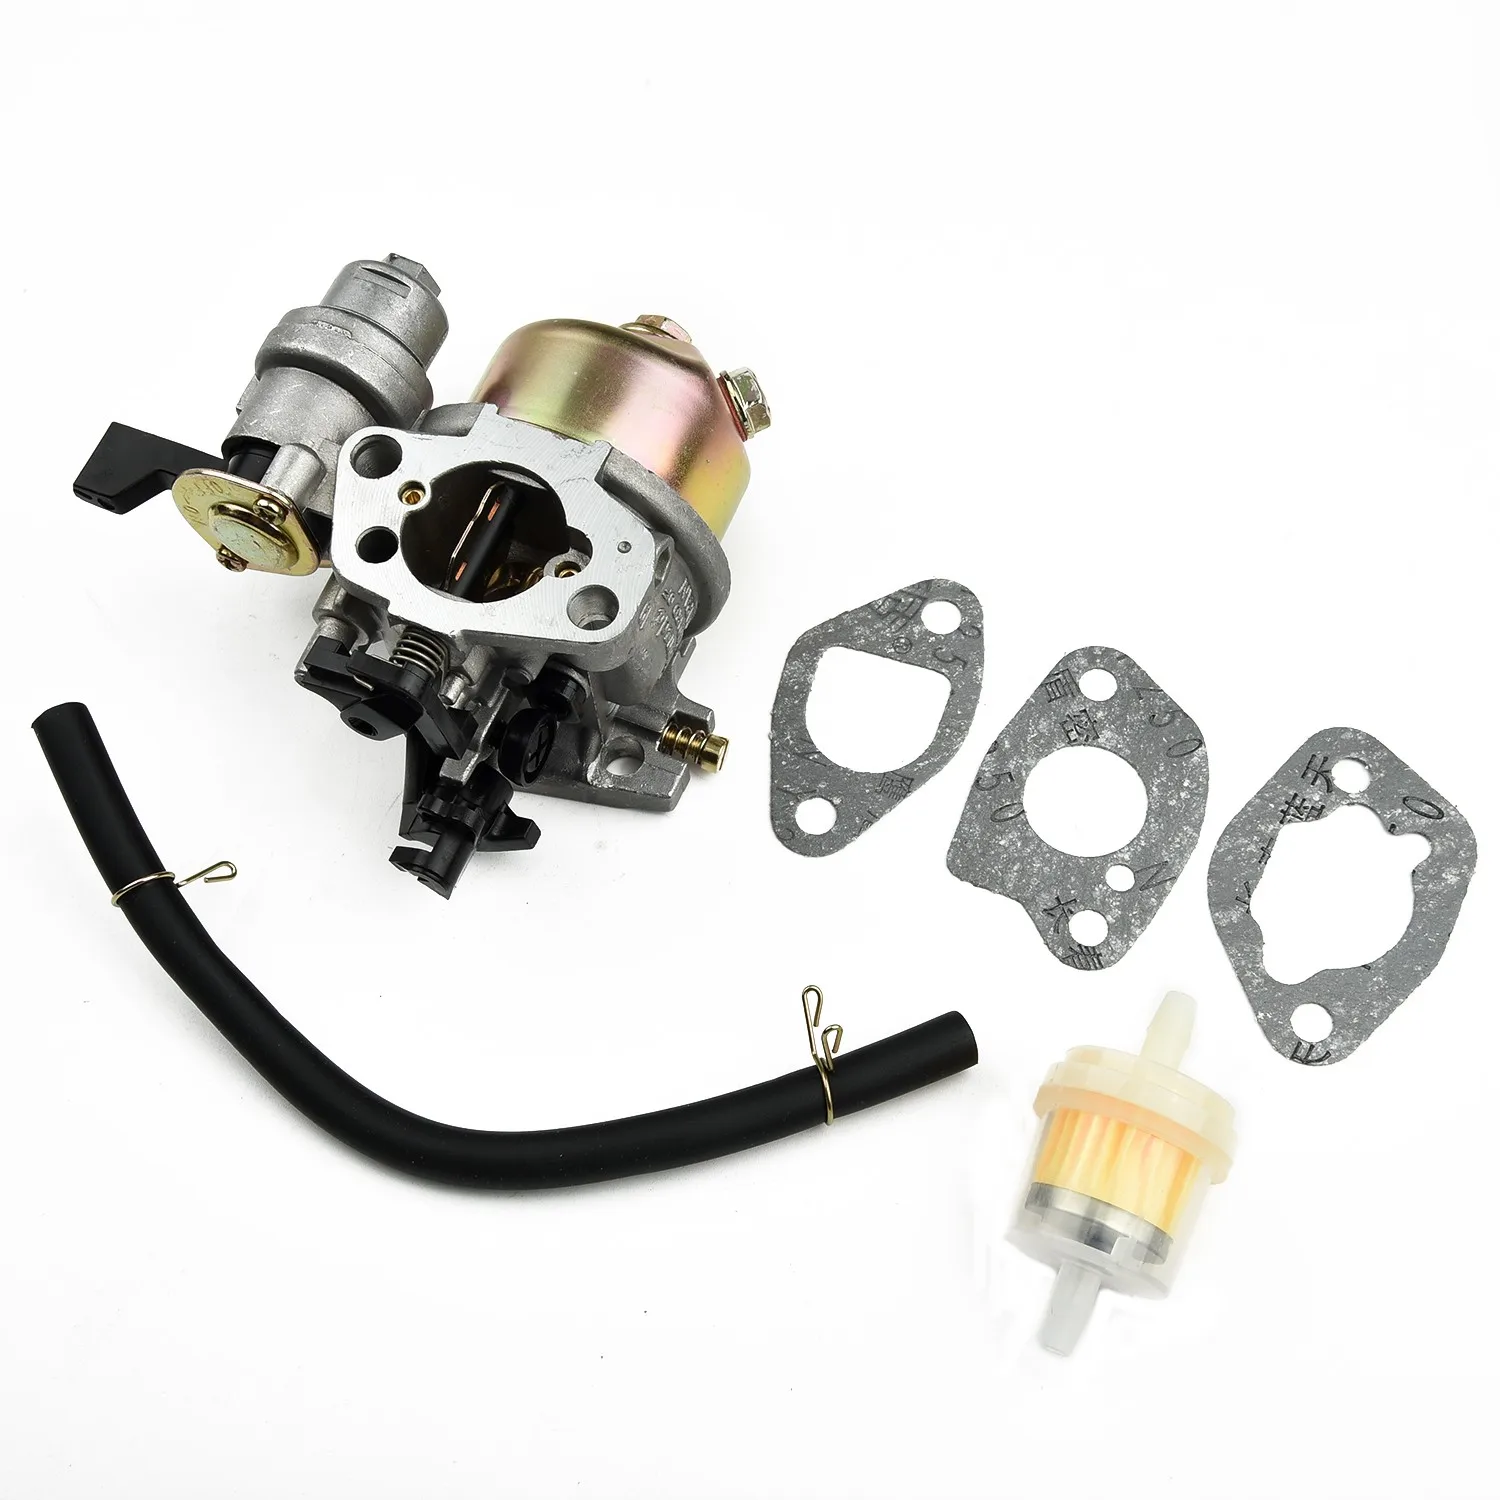 6pcs/Set Carburetor For Honda GXV120 GXV140 GXV160 HR194 HR214 HRA214 HR215 HR216 Carb Lawn Mower Parts Accessories Replacement